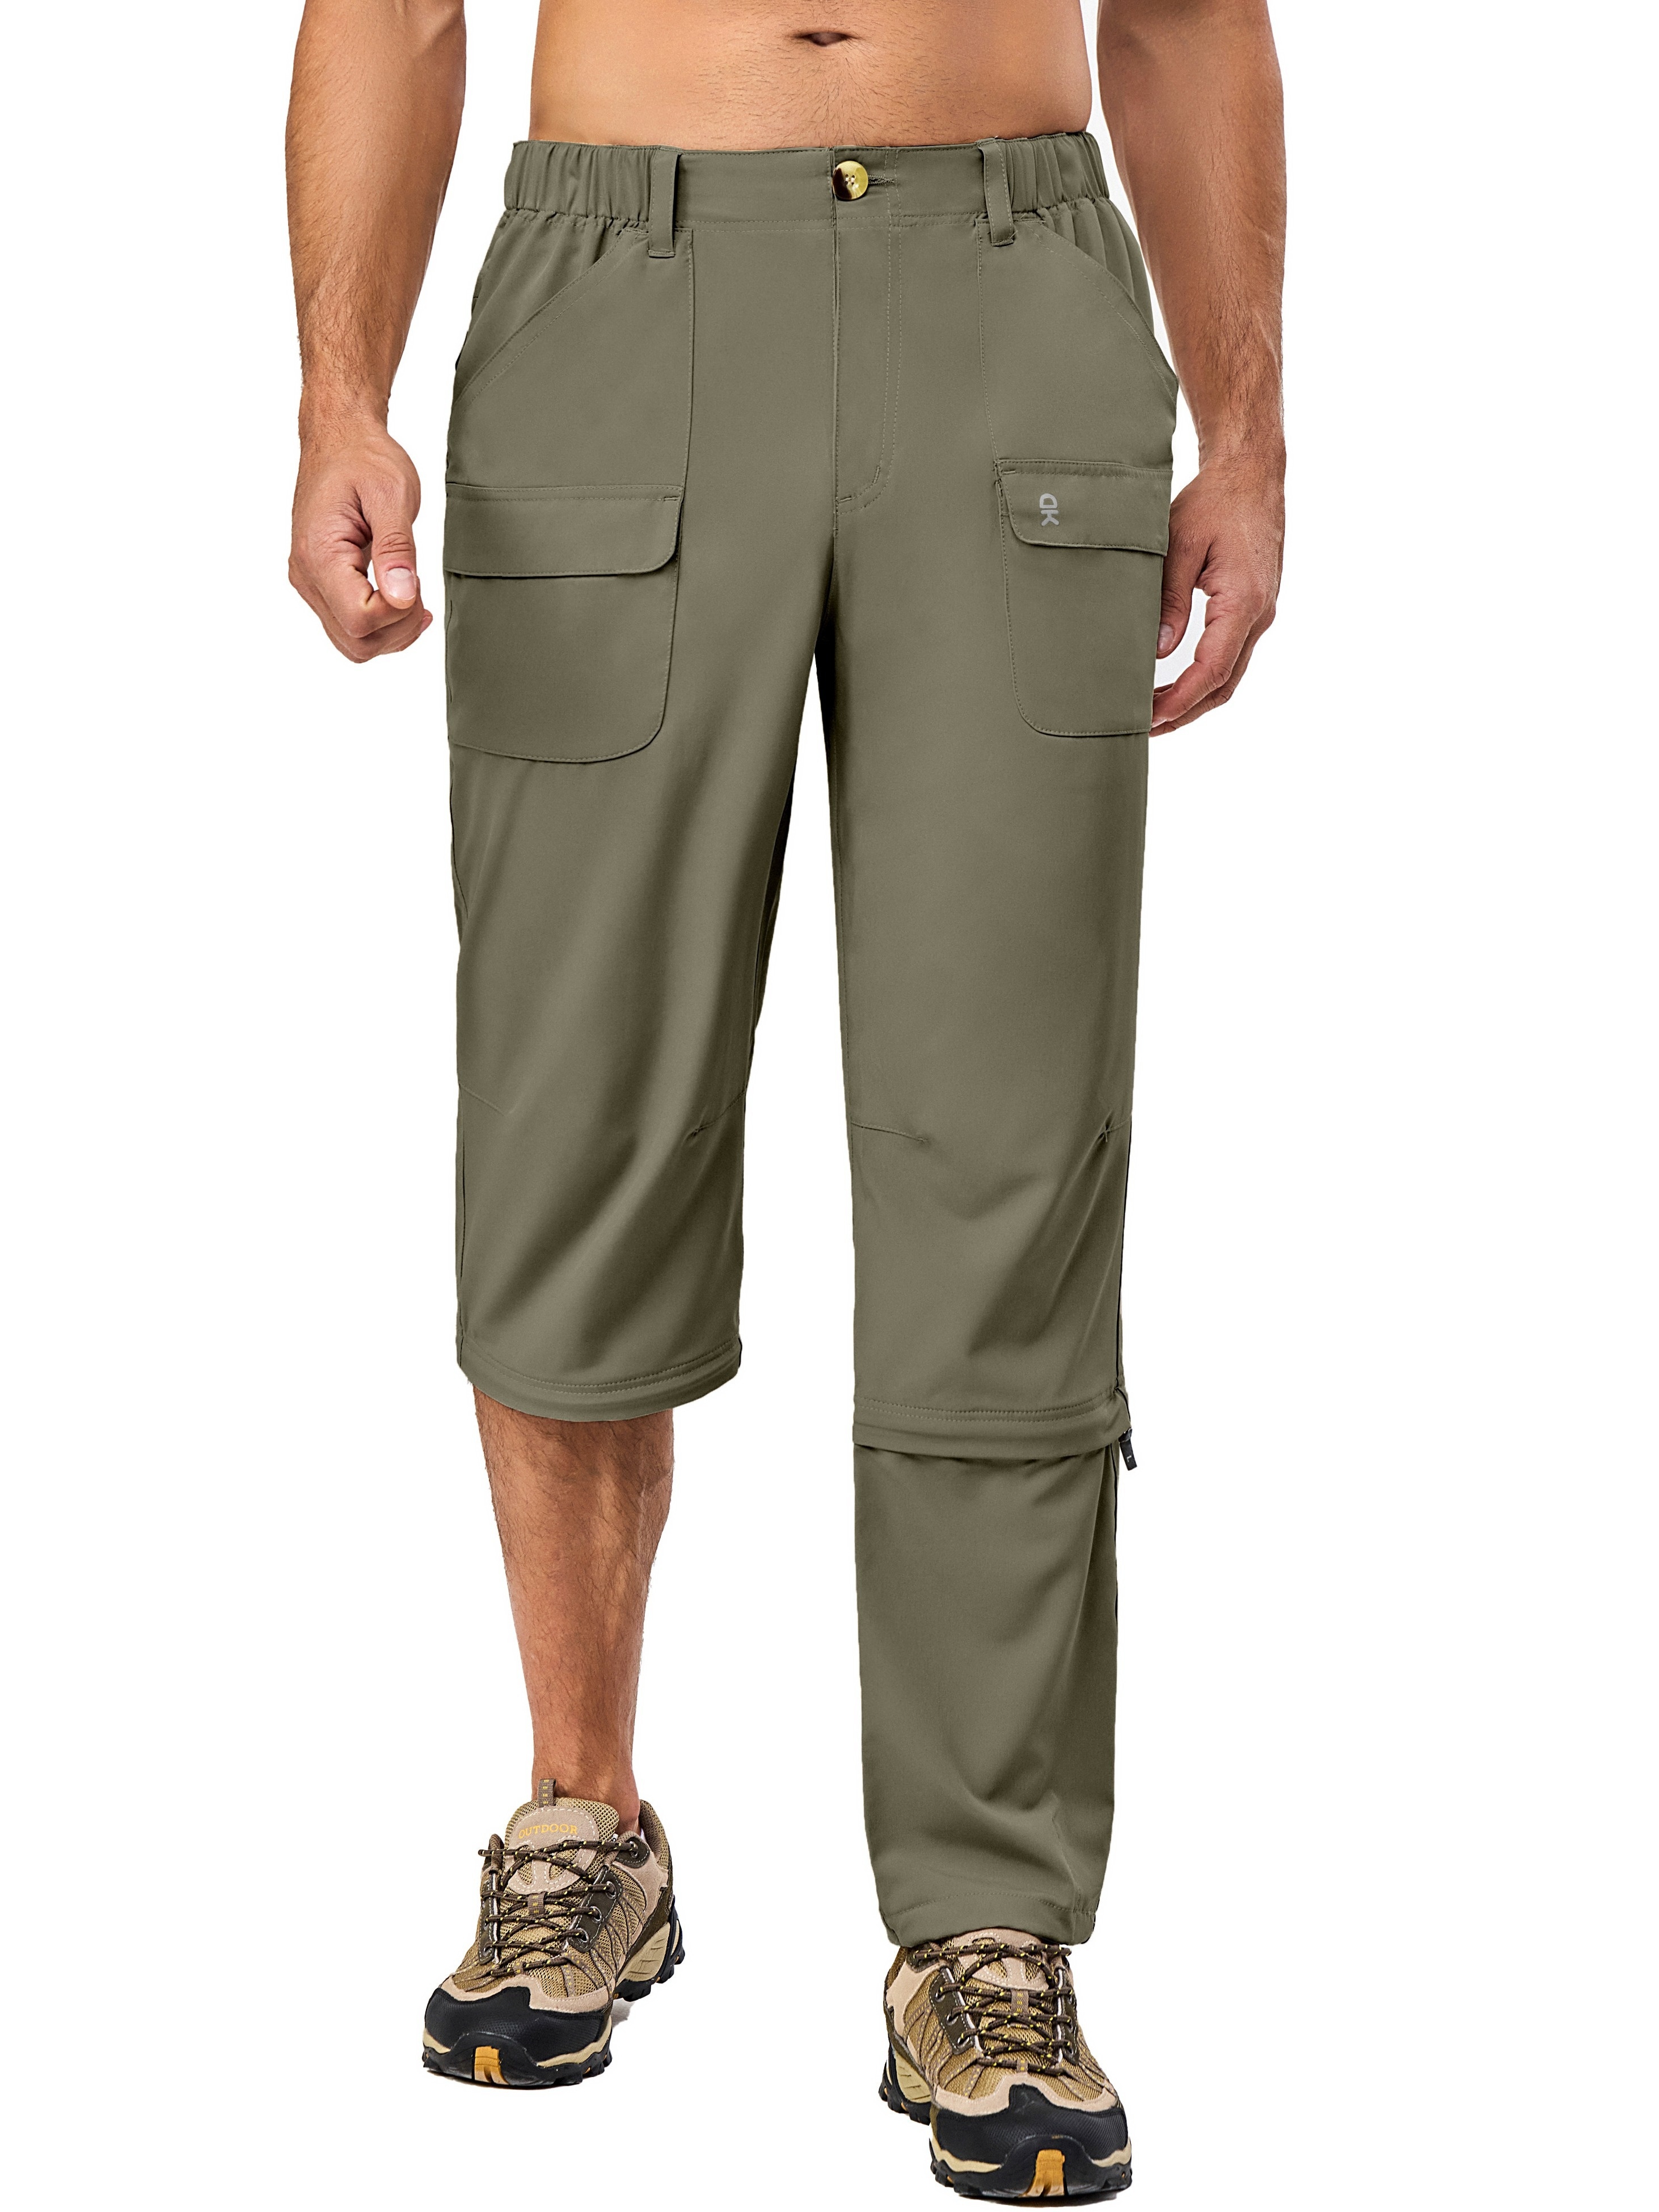 American Trends Men’s Hiking Pants Convertible Quick Dry Pants Outdoor Sport Lightweight Cargo Pants Fishing Tactical Pants